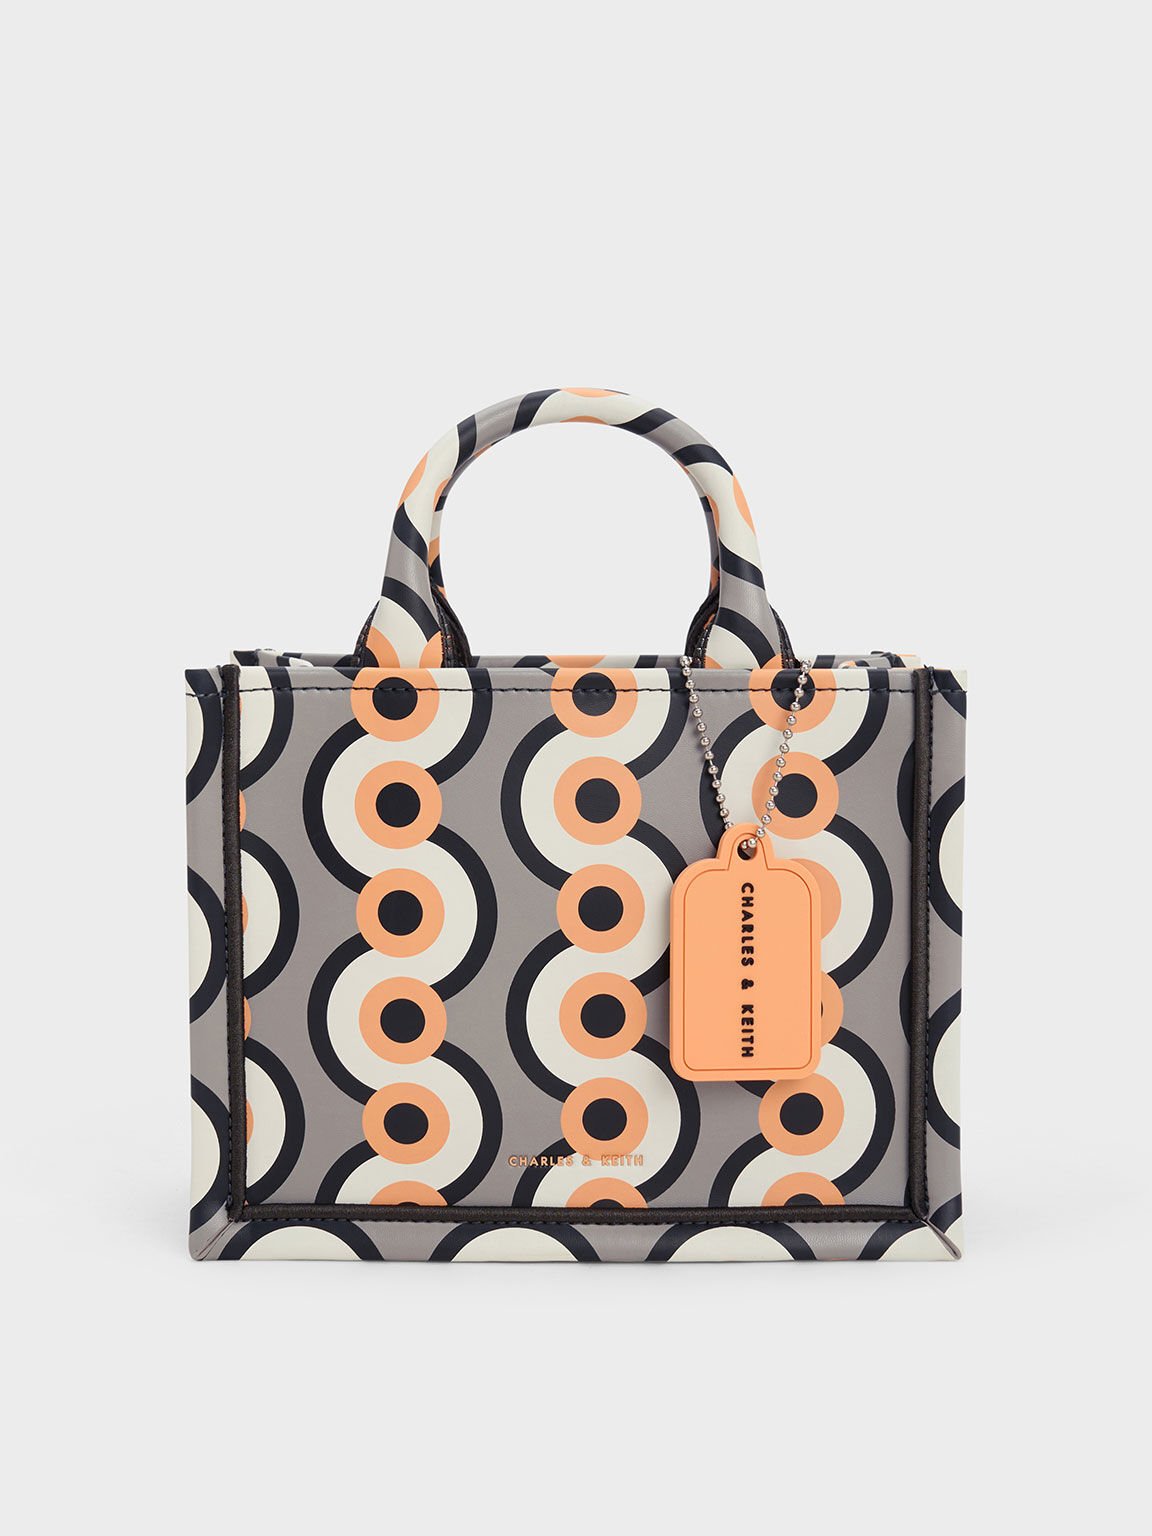 SALE: Women's Bags, Shop Online